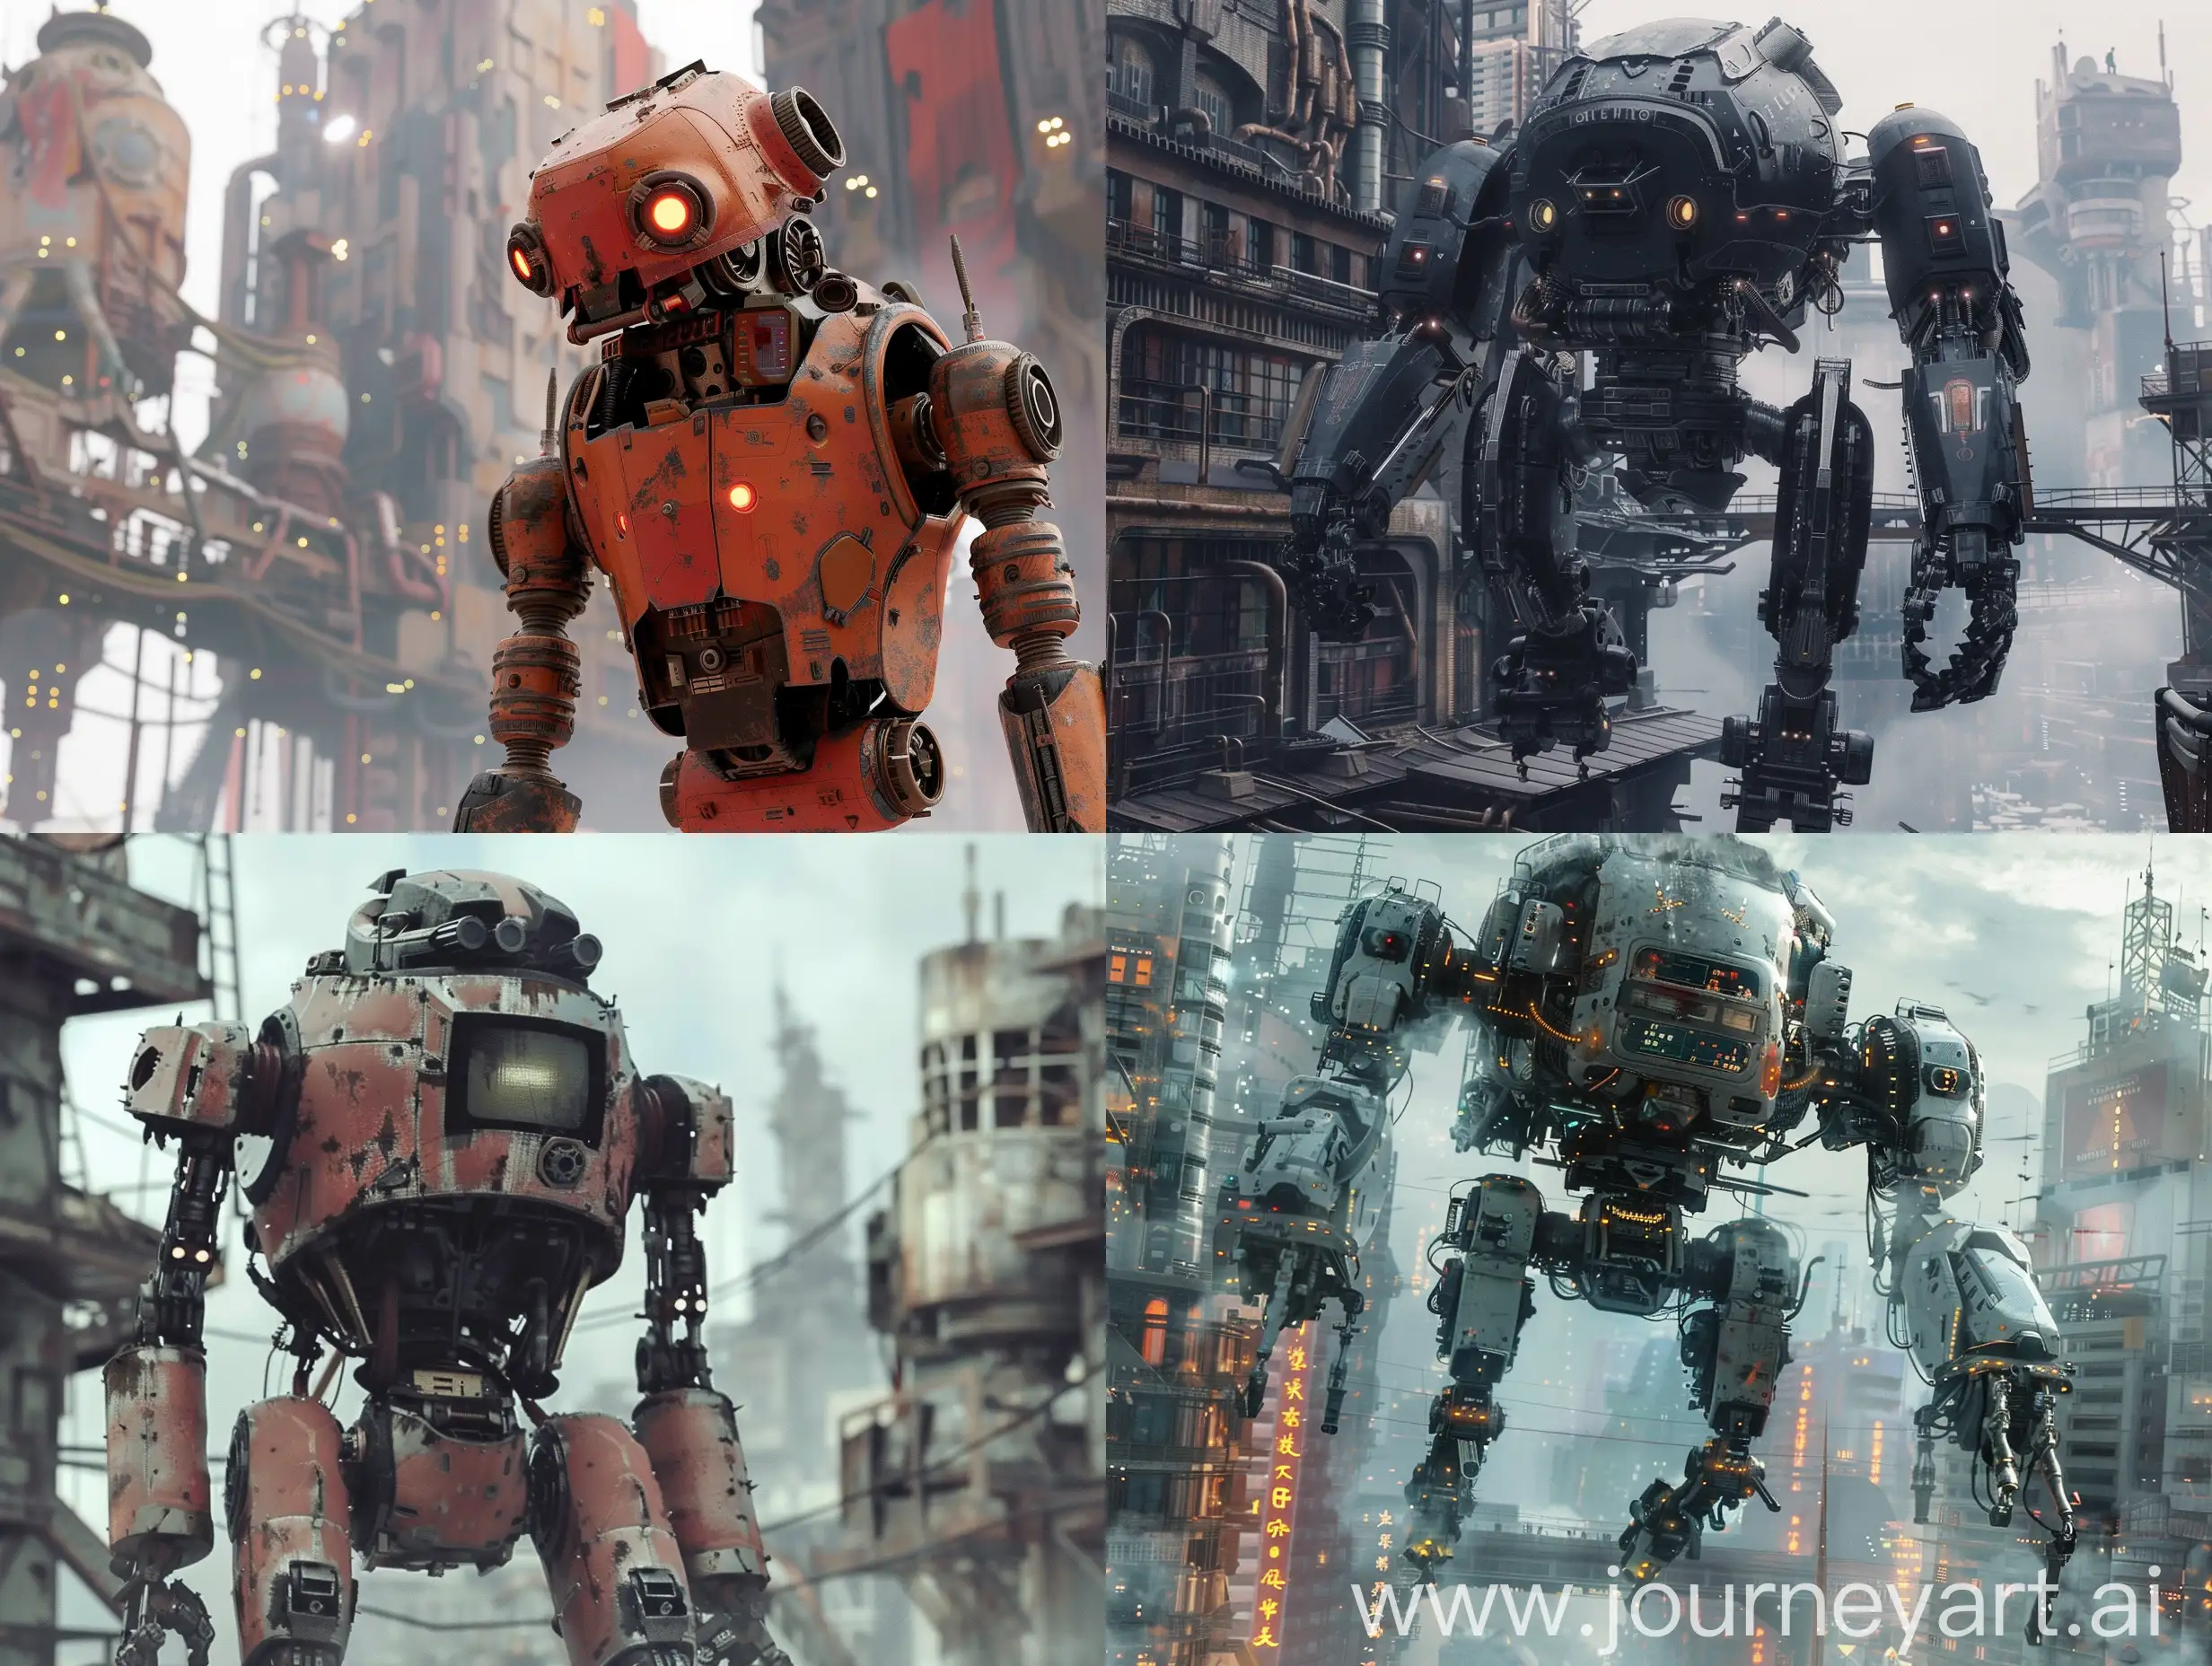 Cinematic-Futuristic-Steampunk-Robot-in-Dystopian-Mech-City